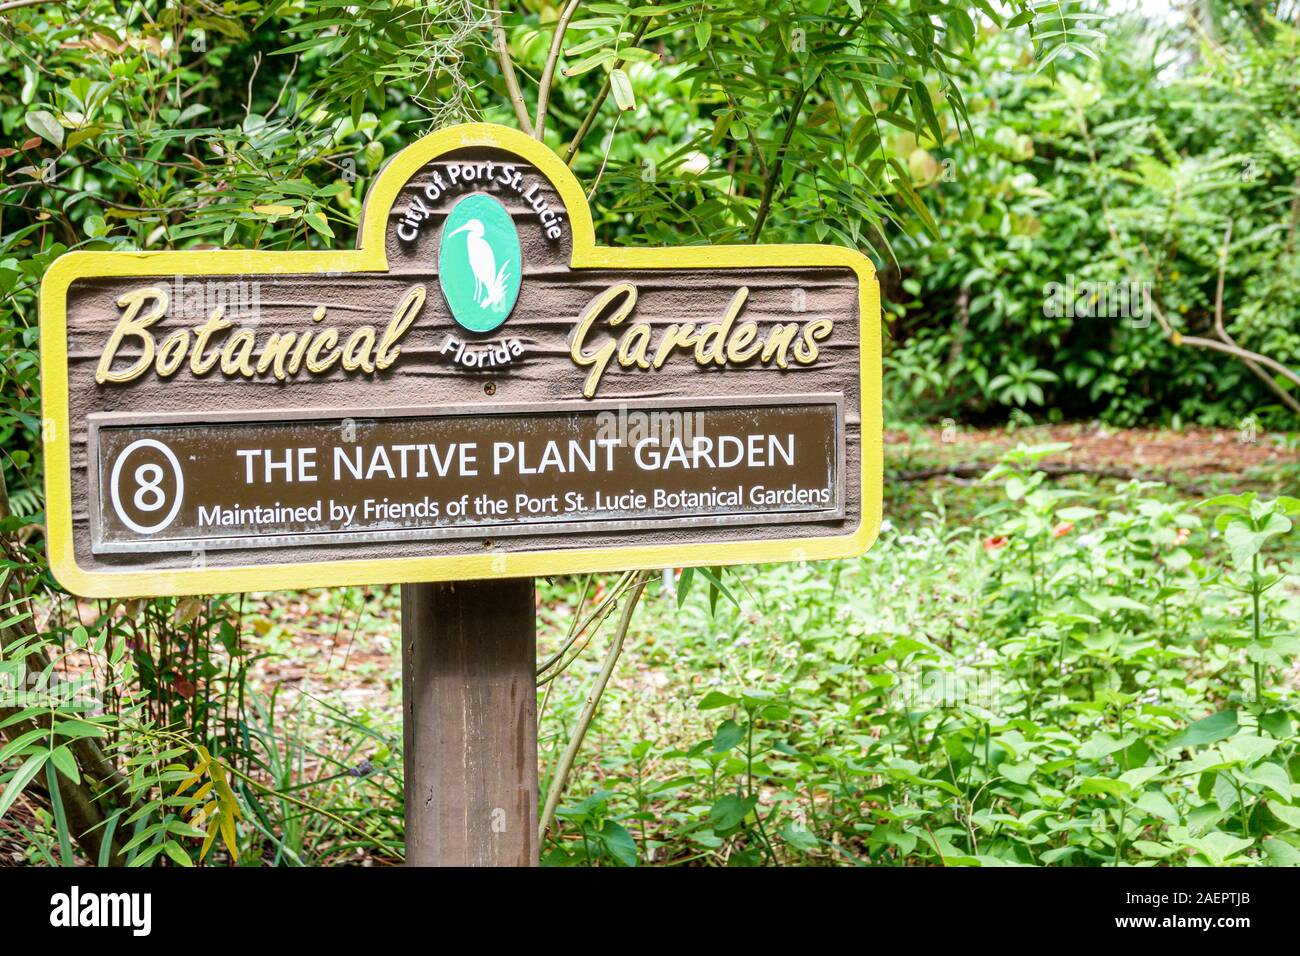 Port St. Saint Lucie Florida,Port St. Lucie Botanical Gardens,native plant garden,sign,FL190920032 Stock Photo